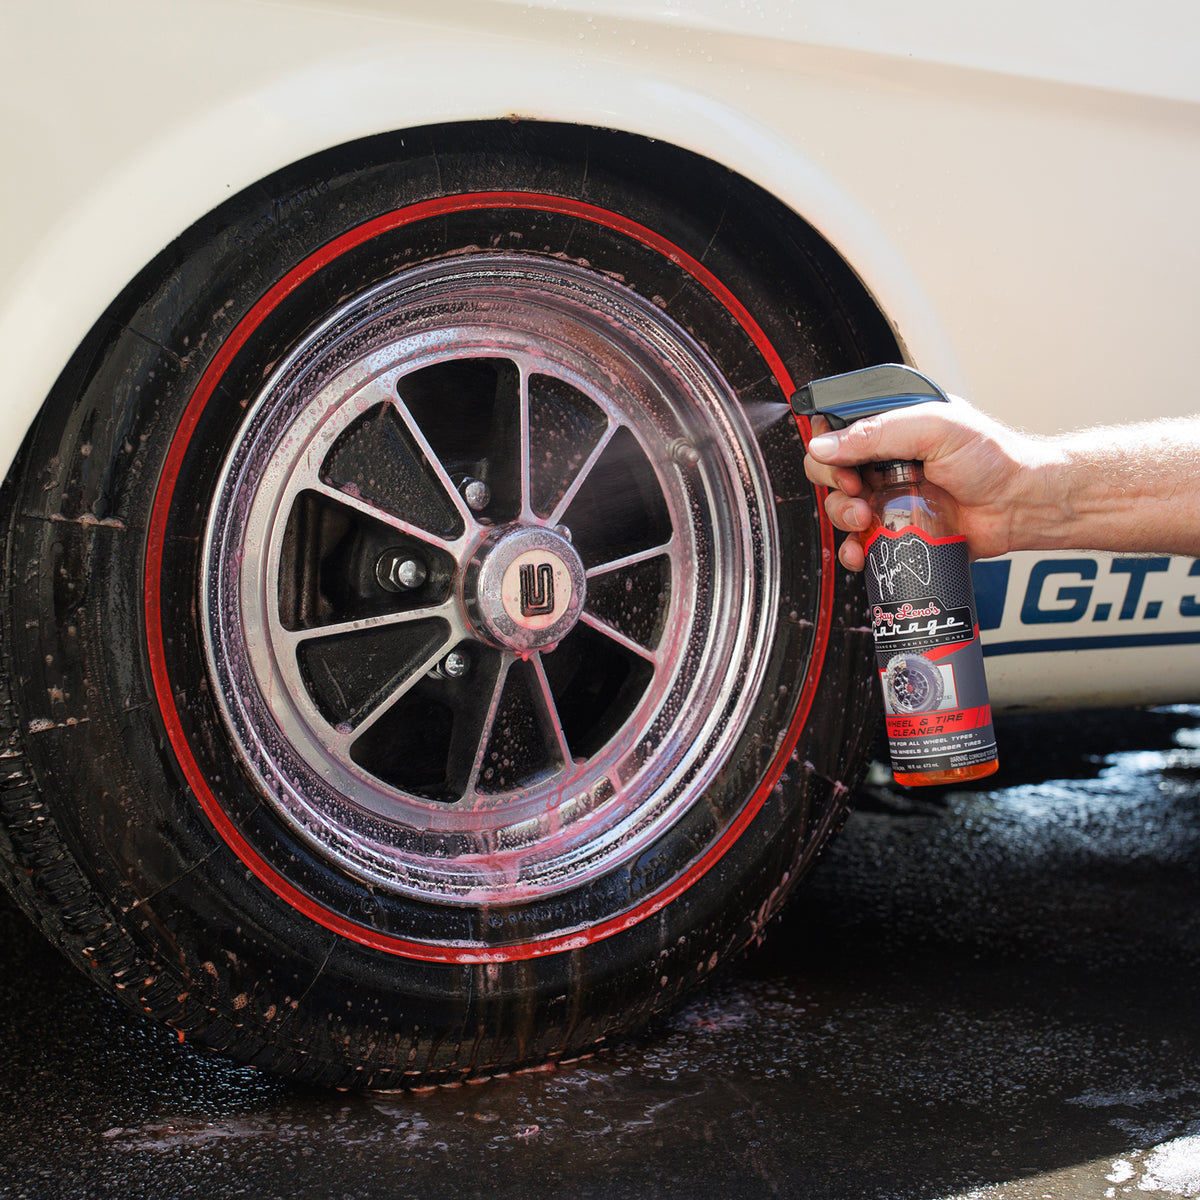 Jay Leno's Garage Wheel Cleaner (16 oz) - Easily Cleans Car Wheels